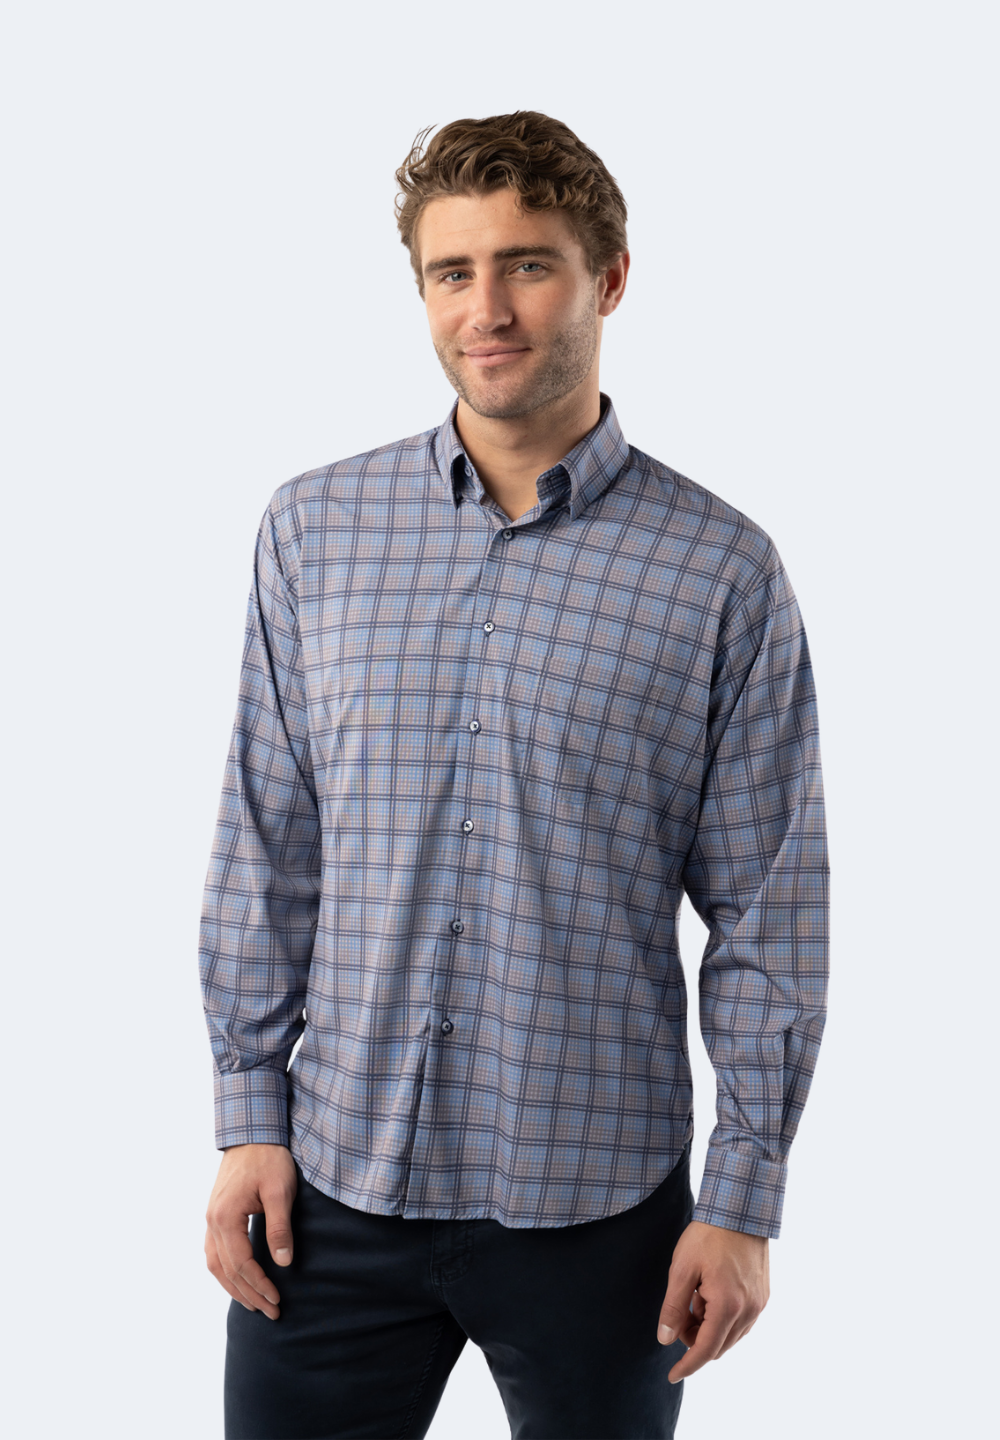 Multi Grey and Blue Plaid Shirt